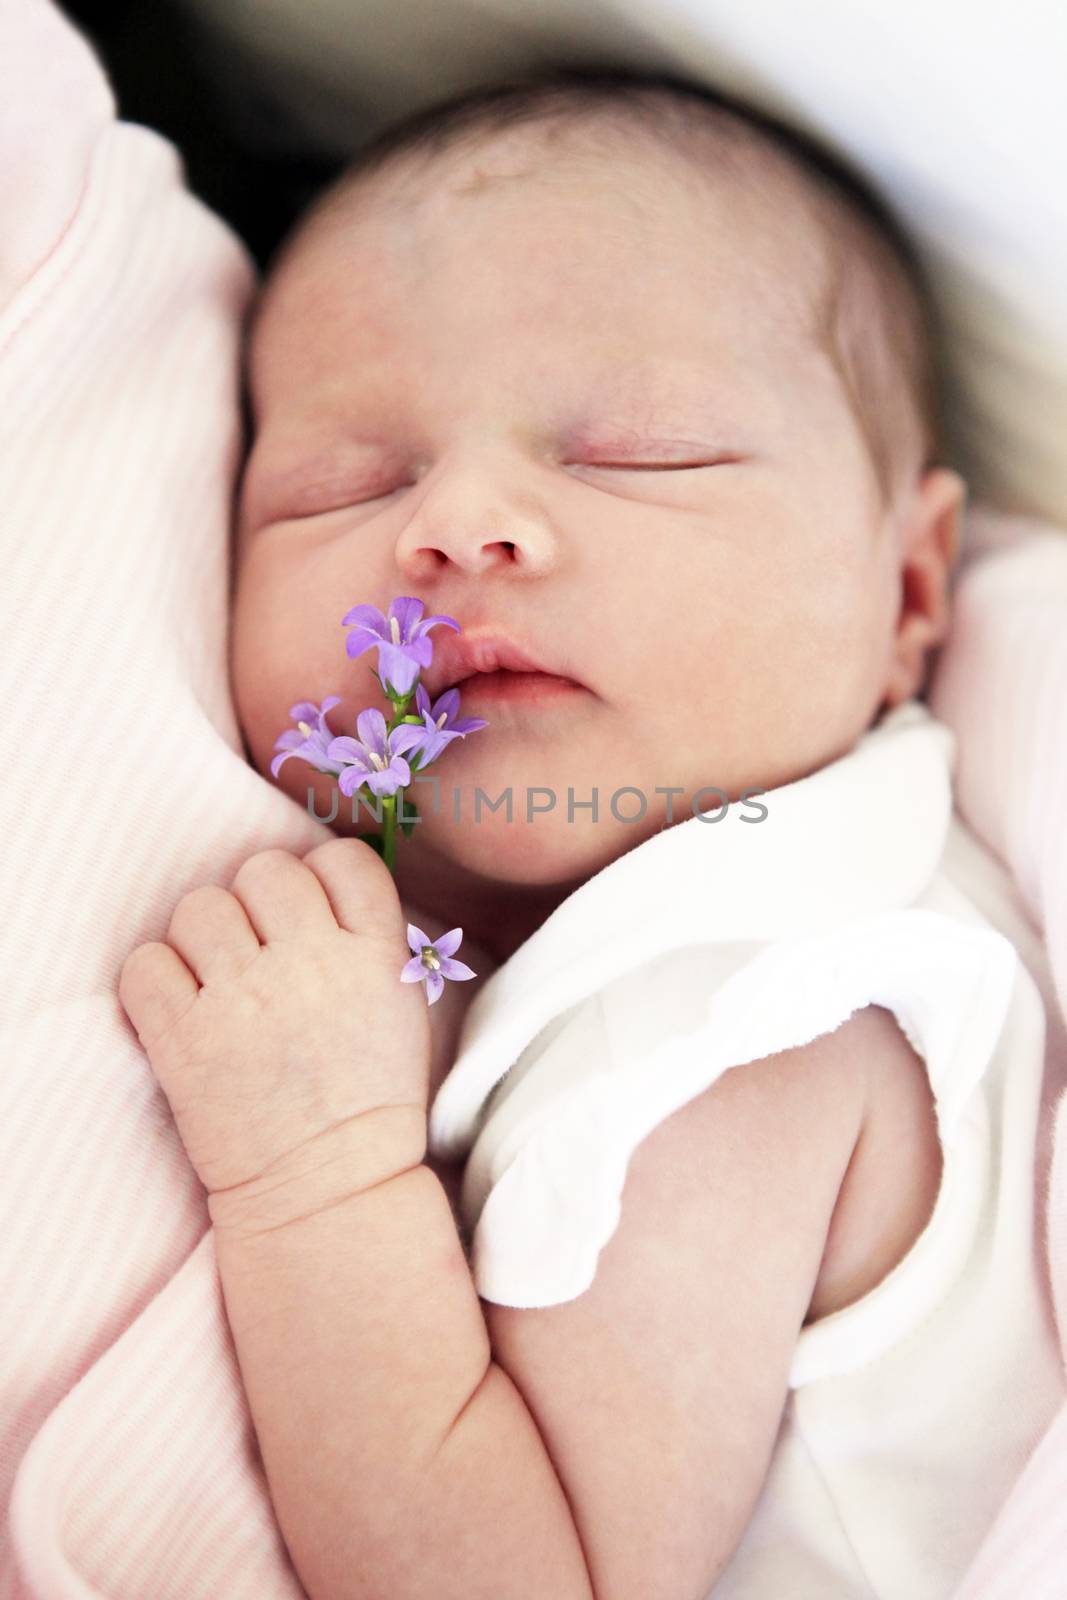 Sleeping newborn baby with flower